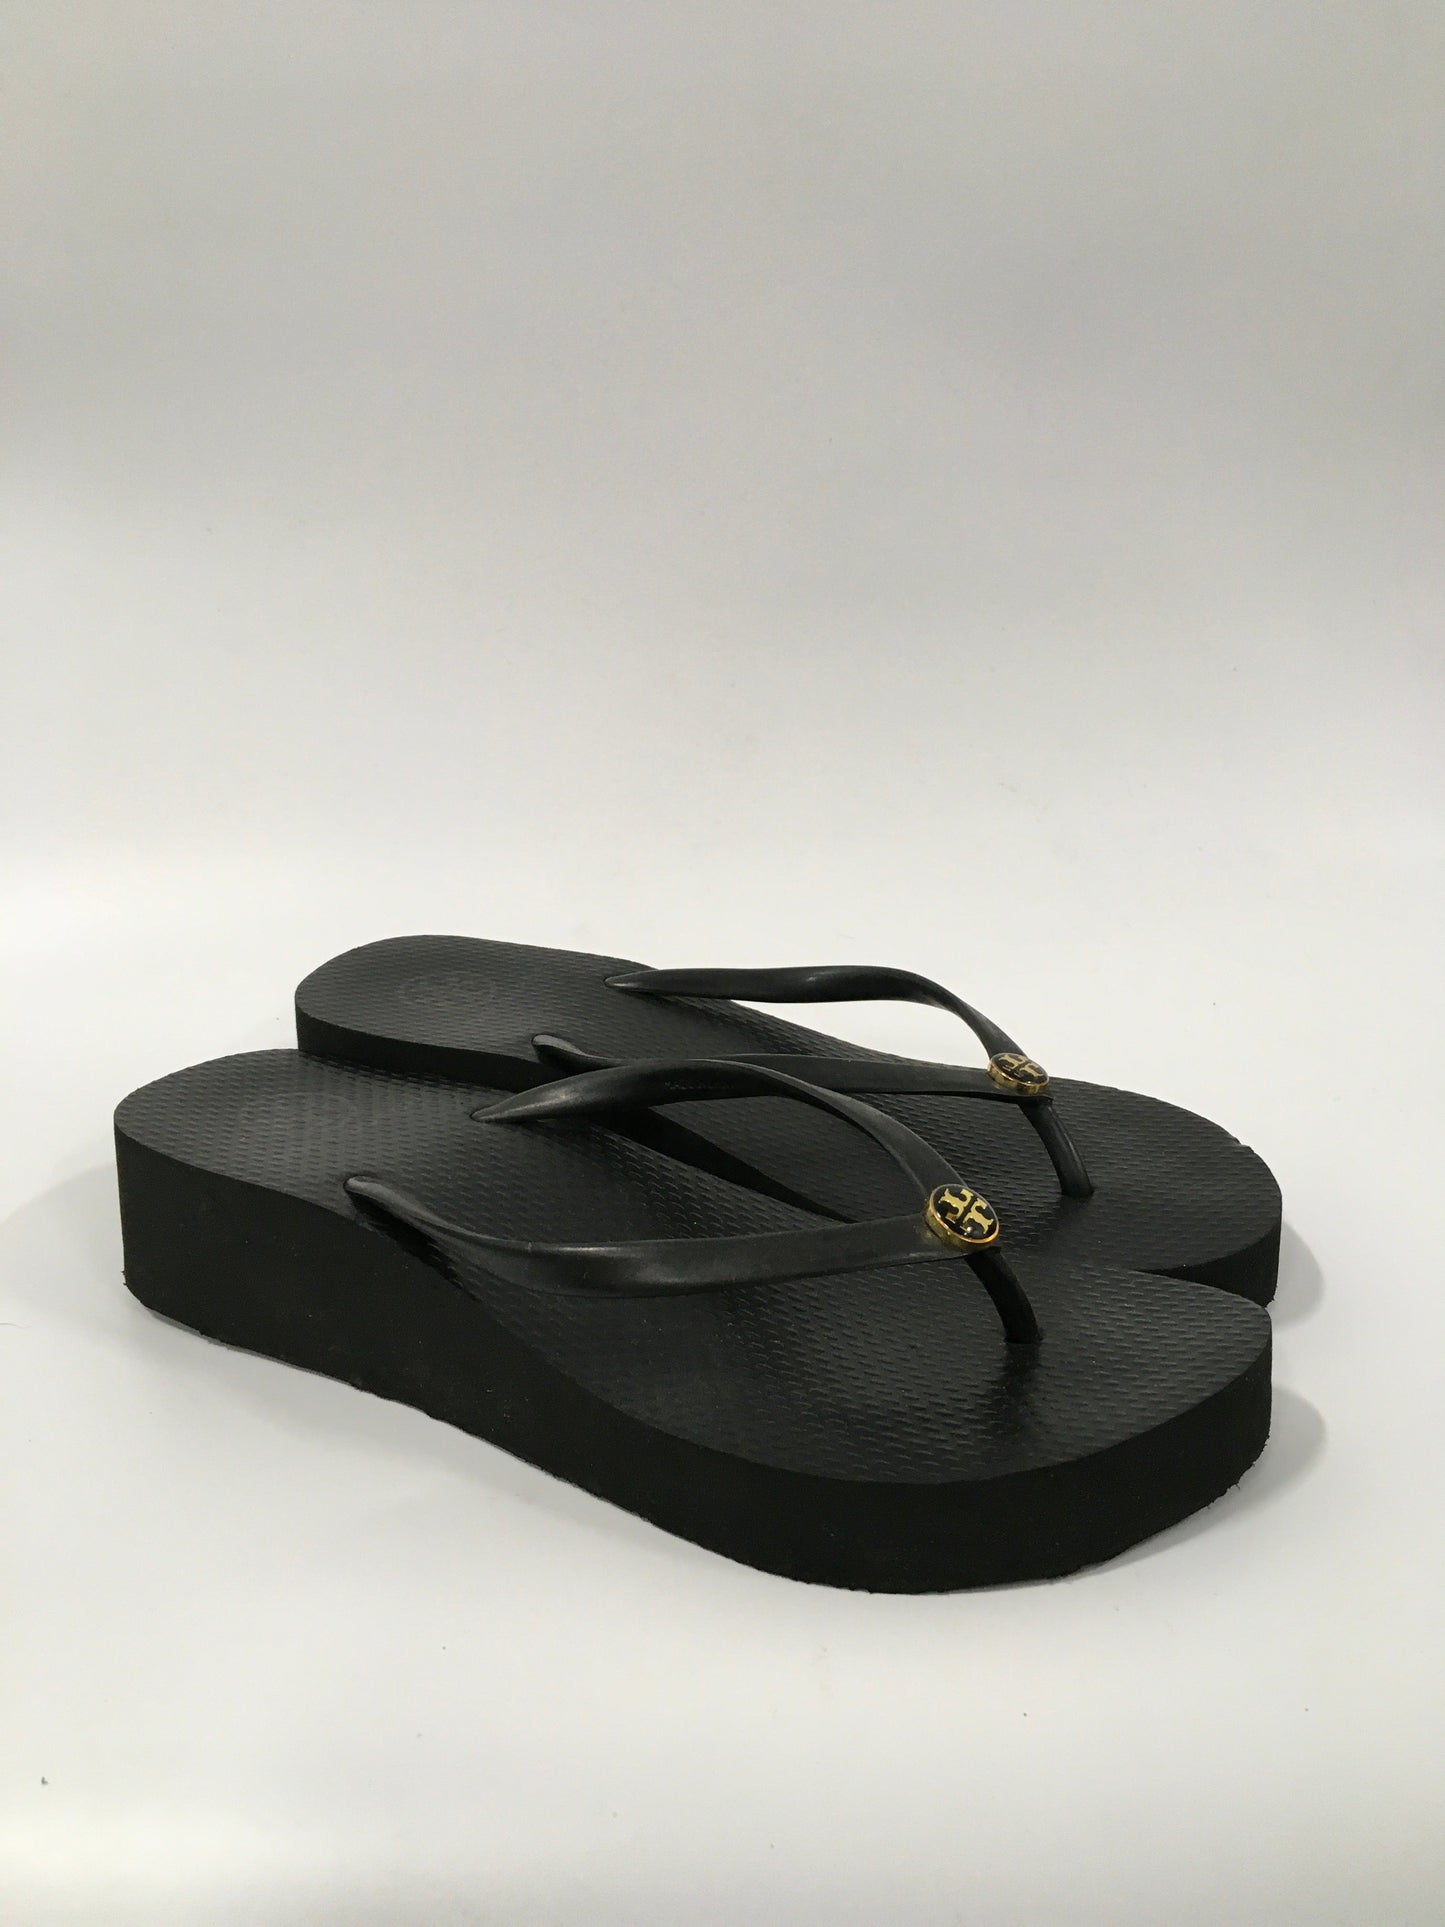 Black Sandals Flip Flops Tory Burch, Size 7.5